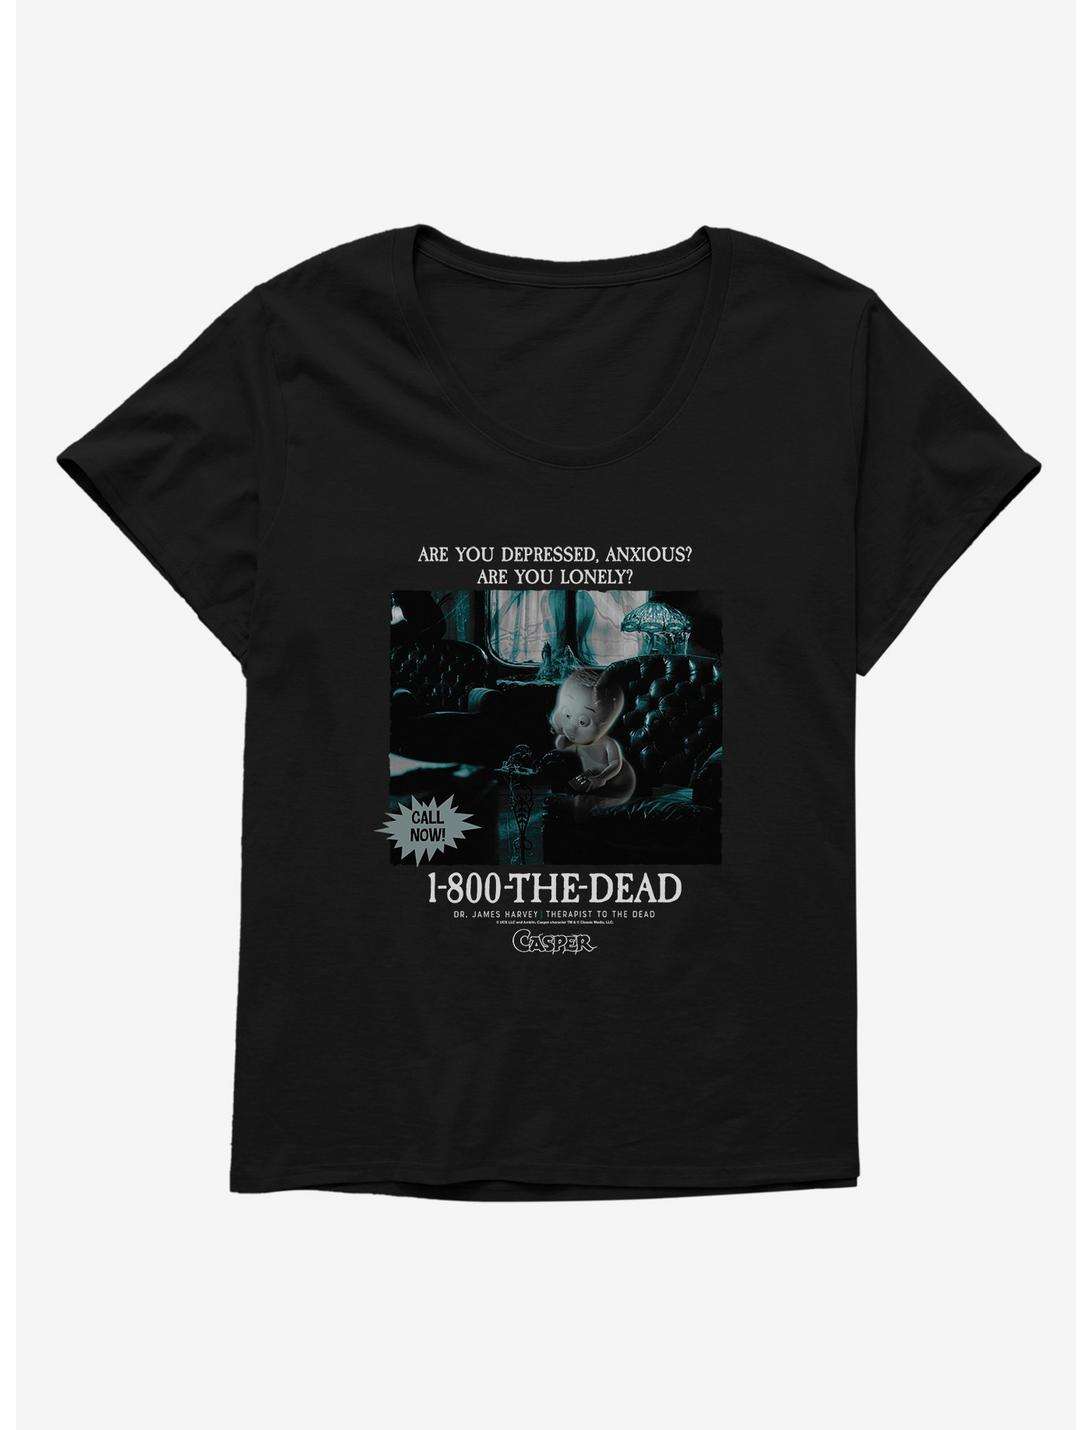 Casper 1-800-THE-DEAD Girls T-Shirt Plus Size, BLACK, hi-res